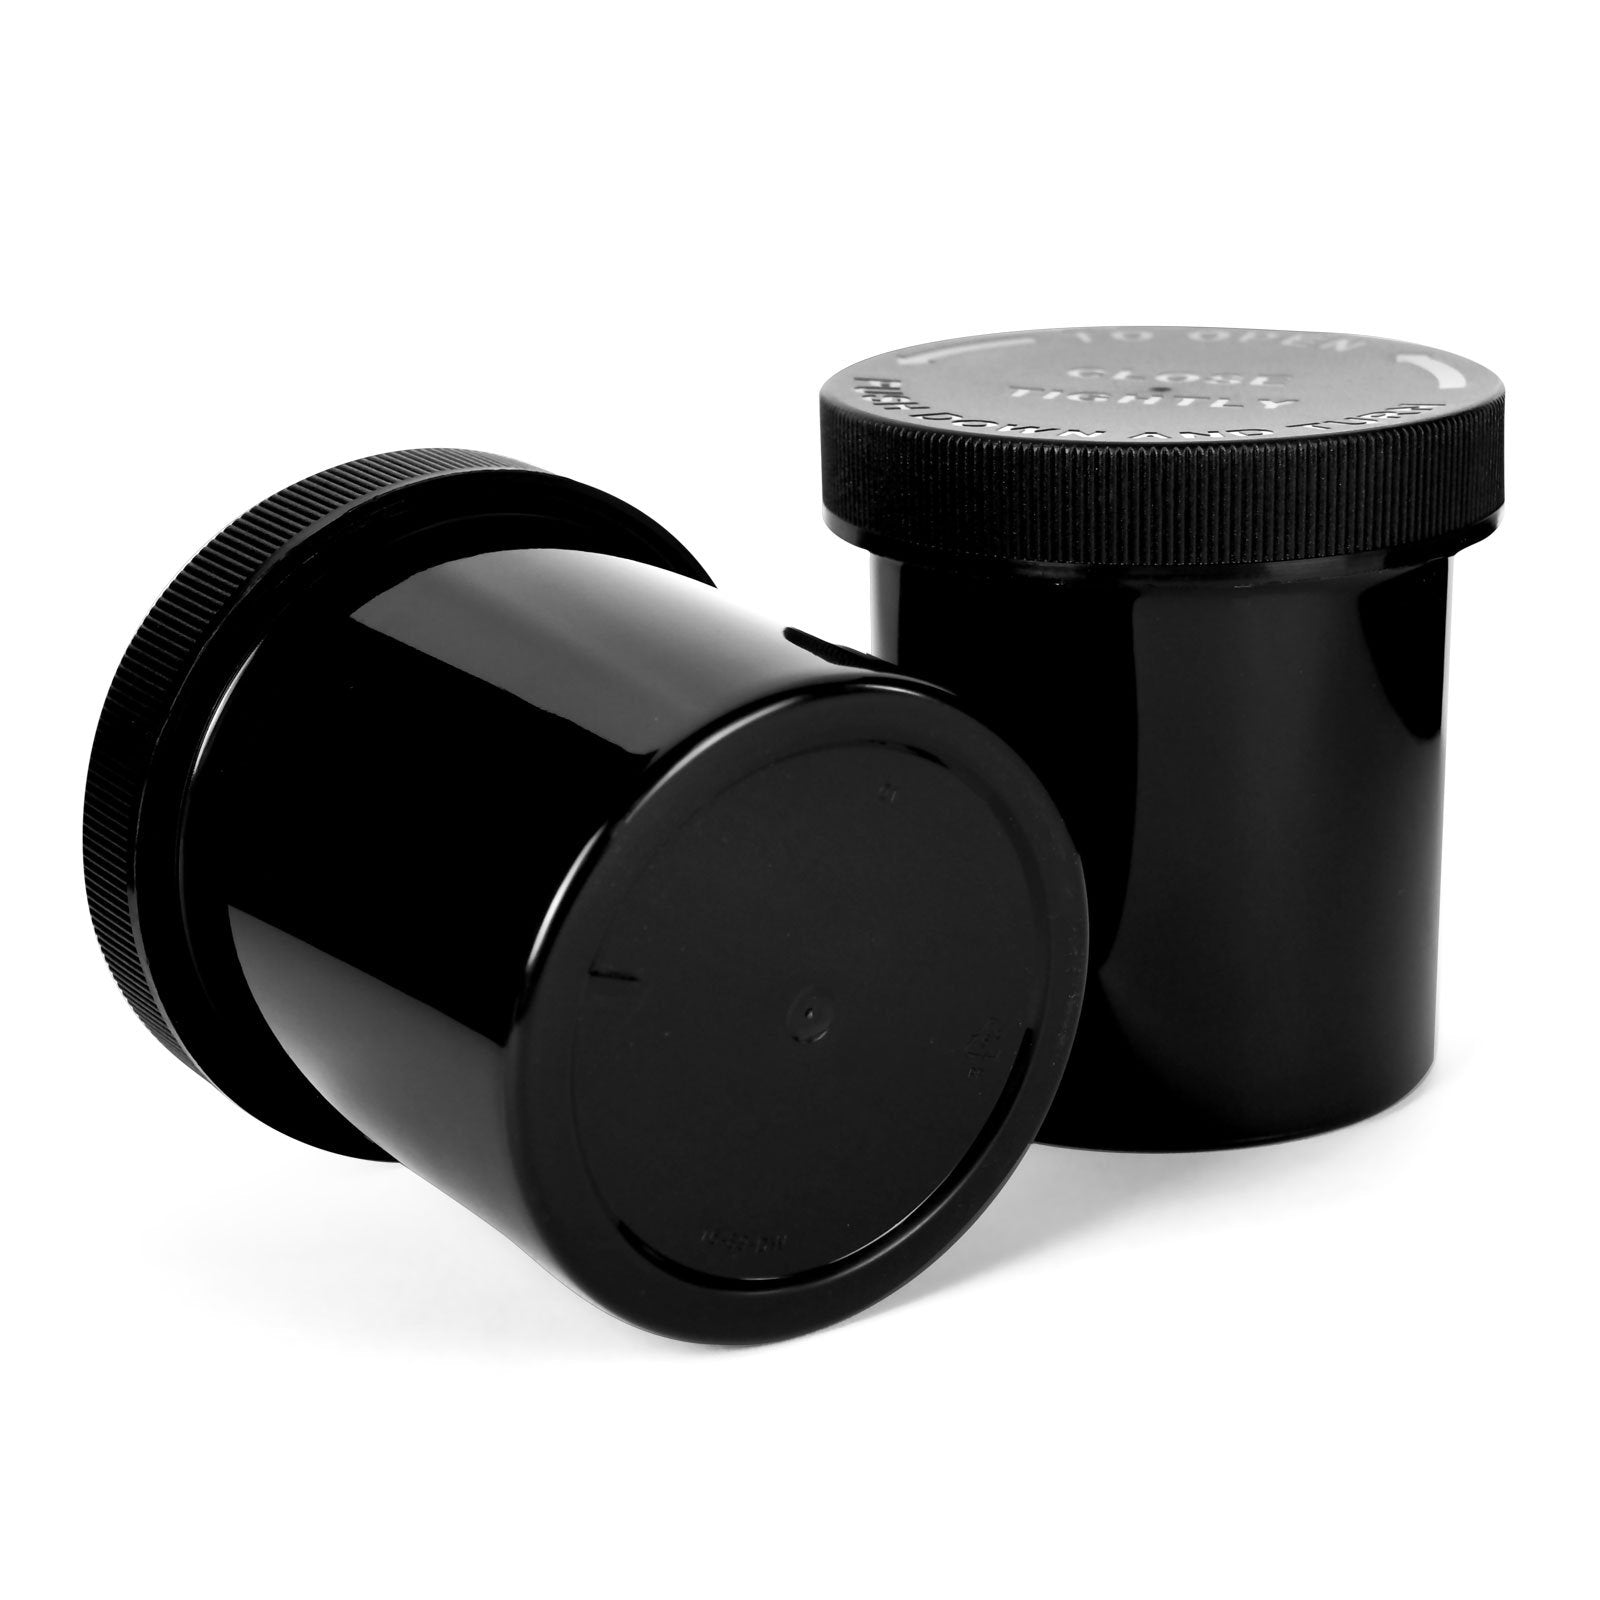 16oz Child Resistant Plastic Jar Black - 28 Grams - 1 Count